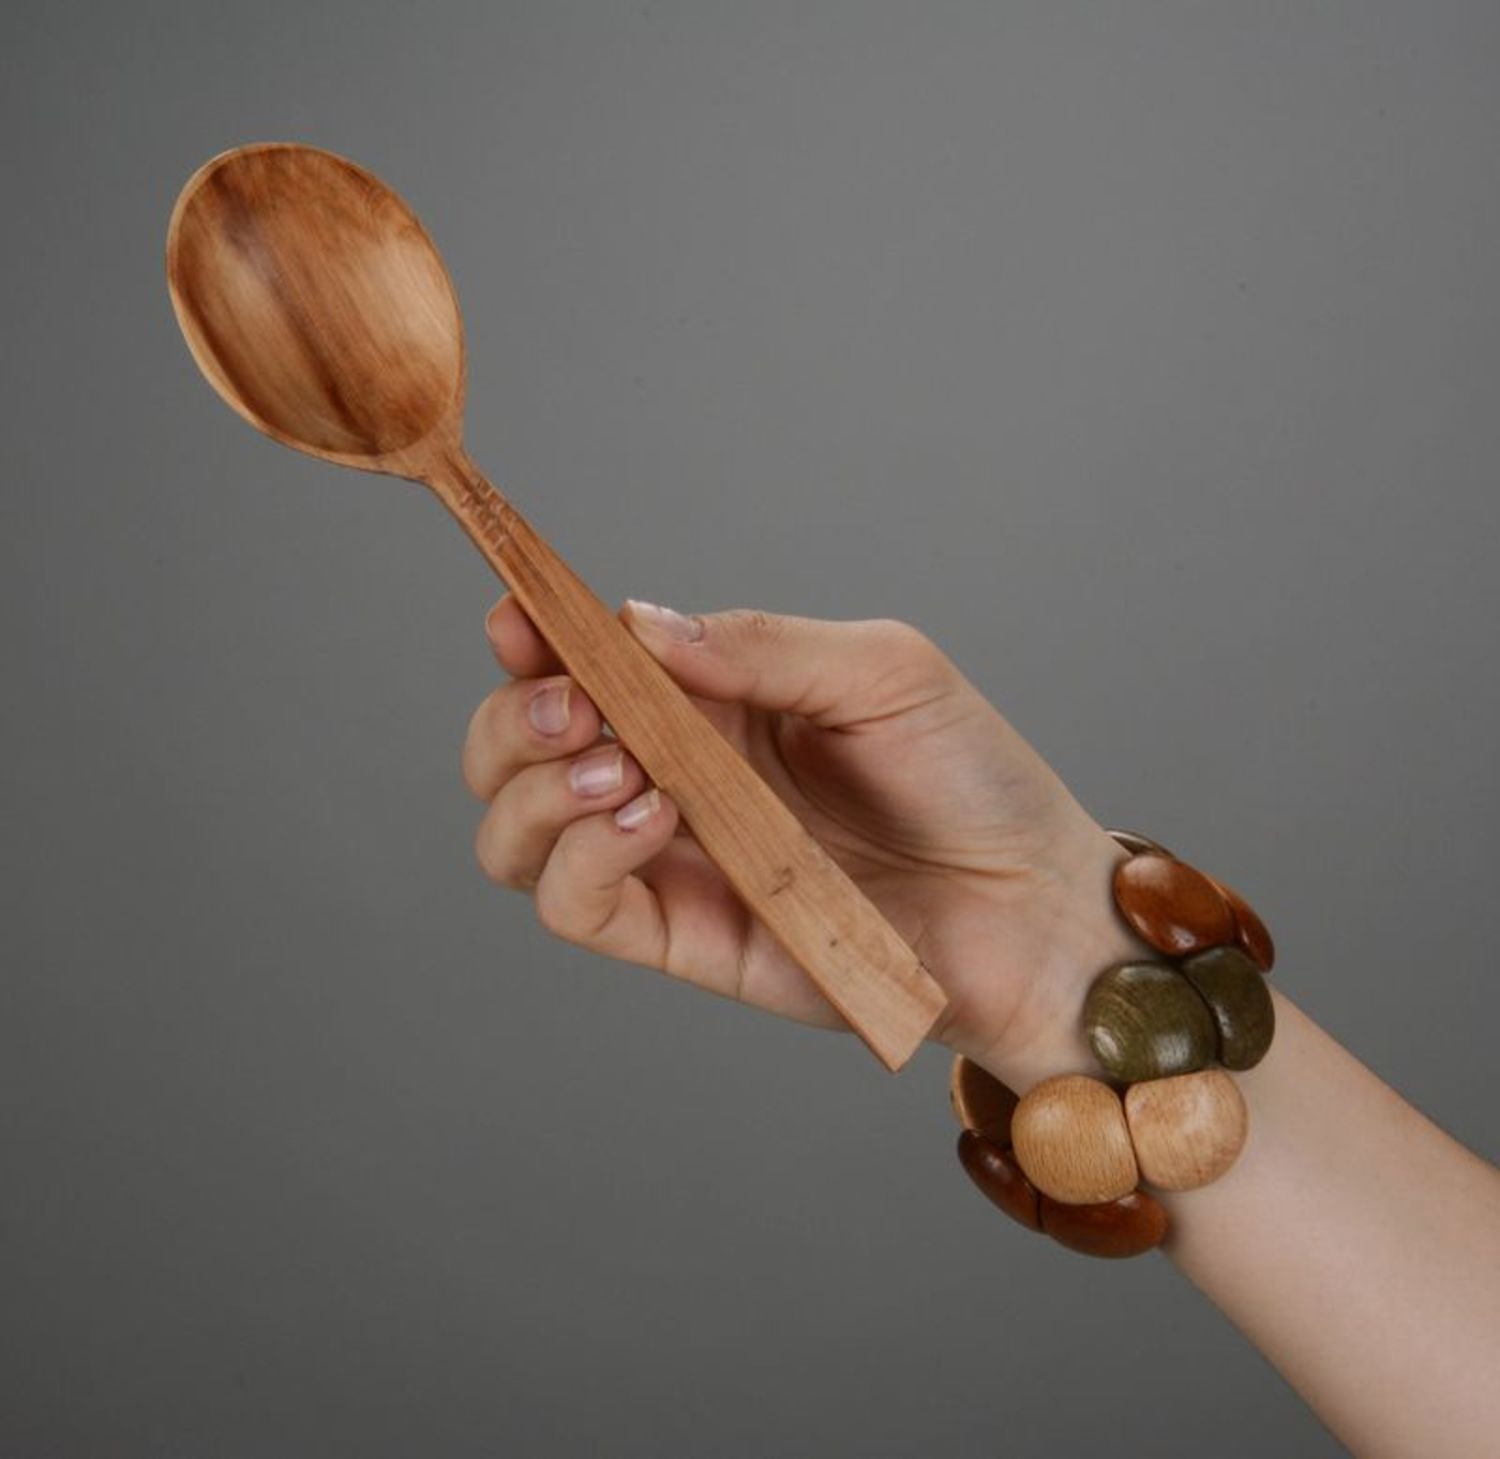 Wooden spoon photo 2